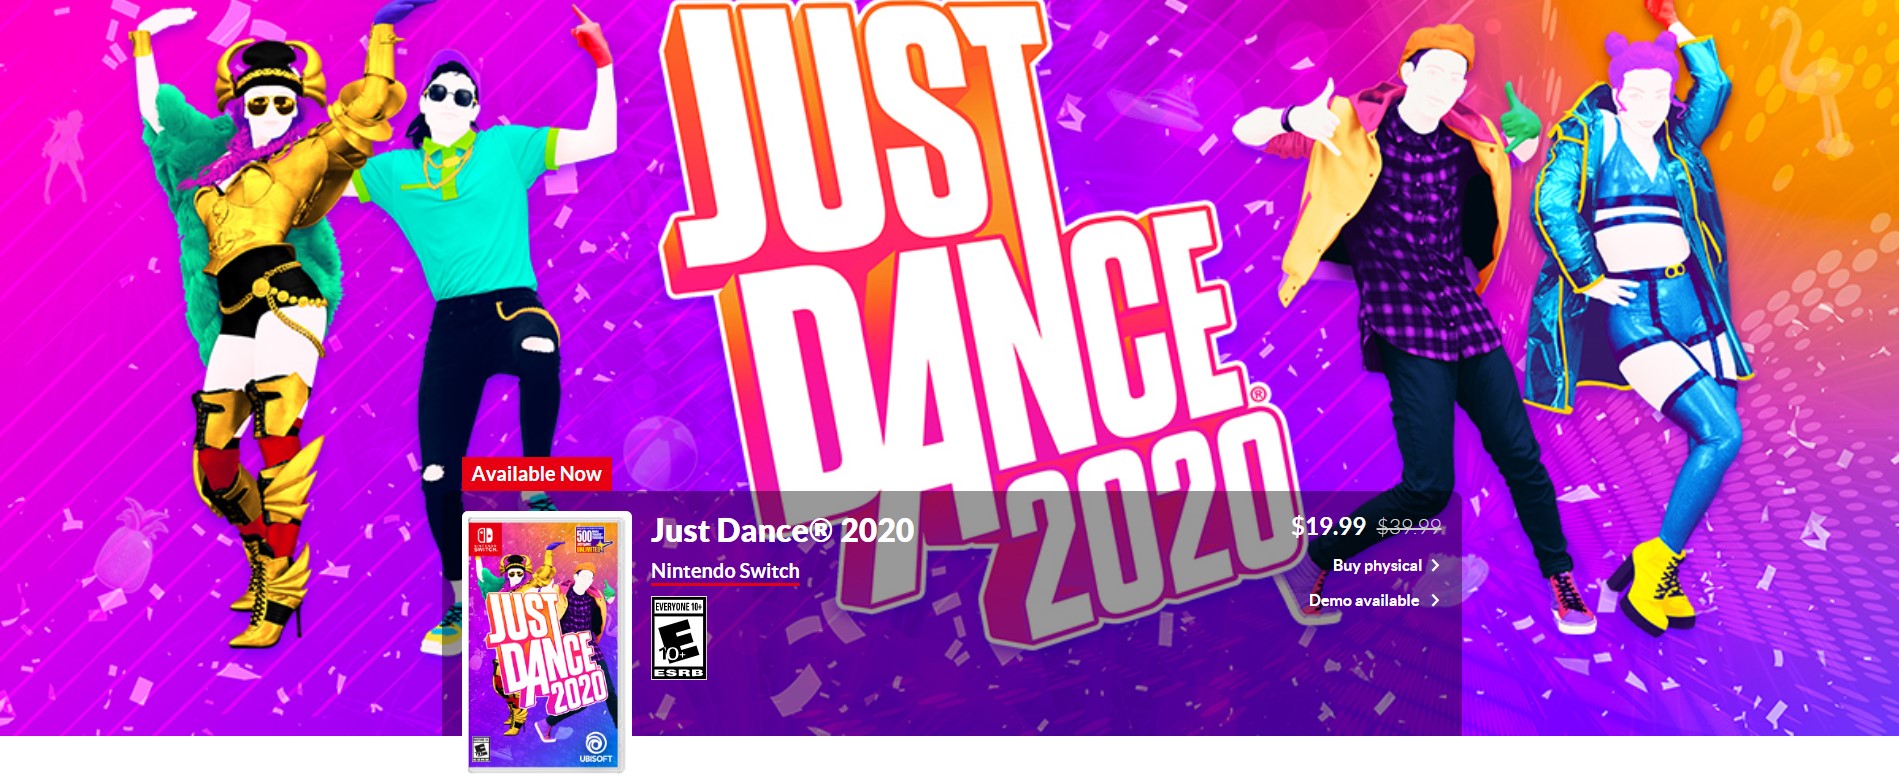 eshop just dance 2020